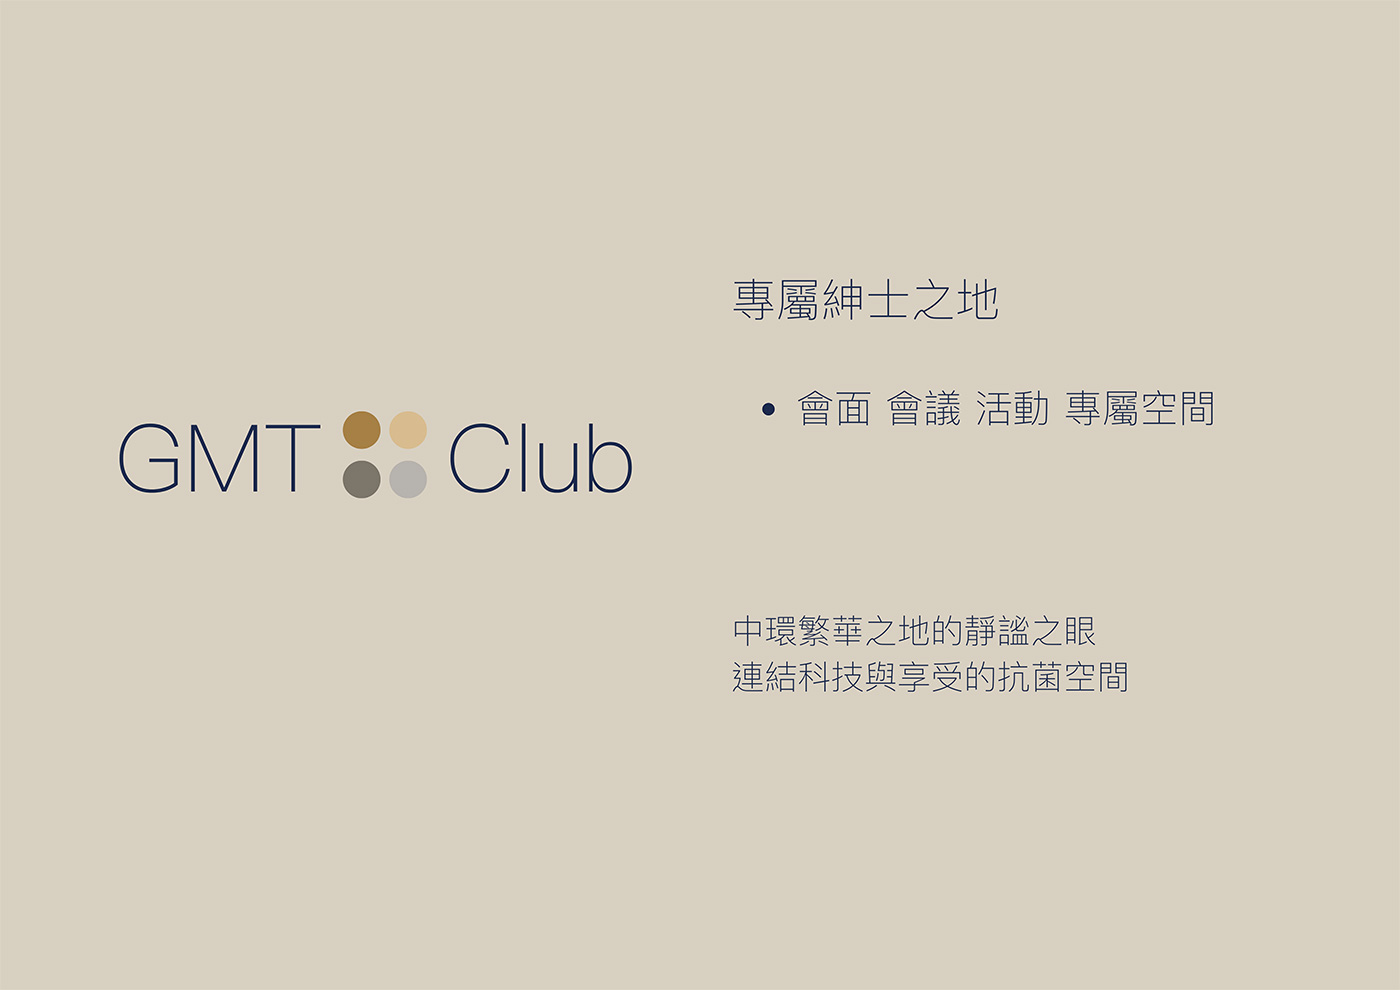 GMT  Club, 專屬紳士之地•會面 會議 活動 專屬空間, 中環繁華之地的靜謐之眼, 連結科技與享受的抗菌空間